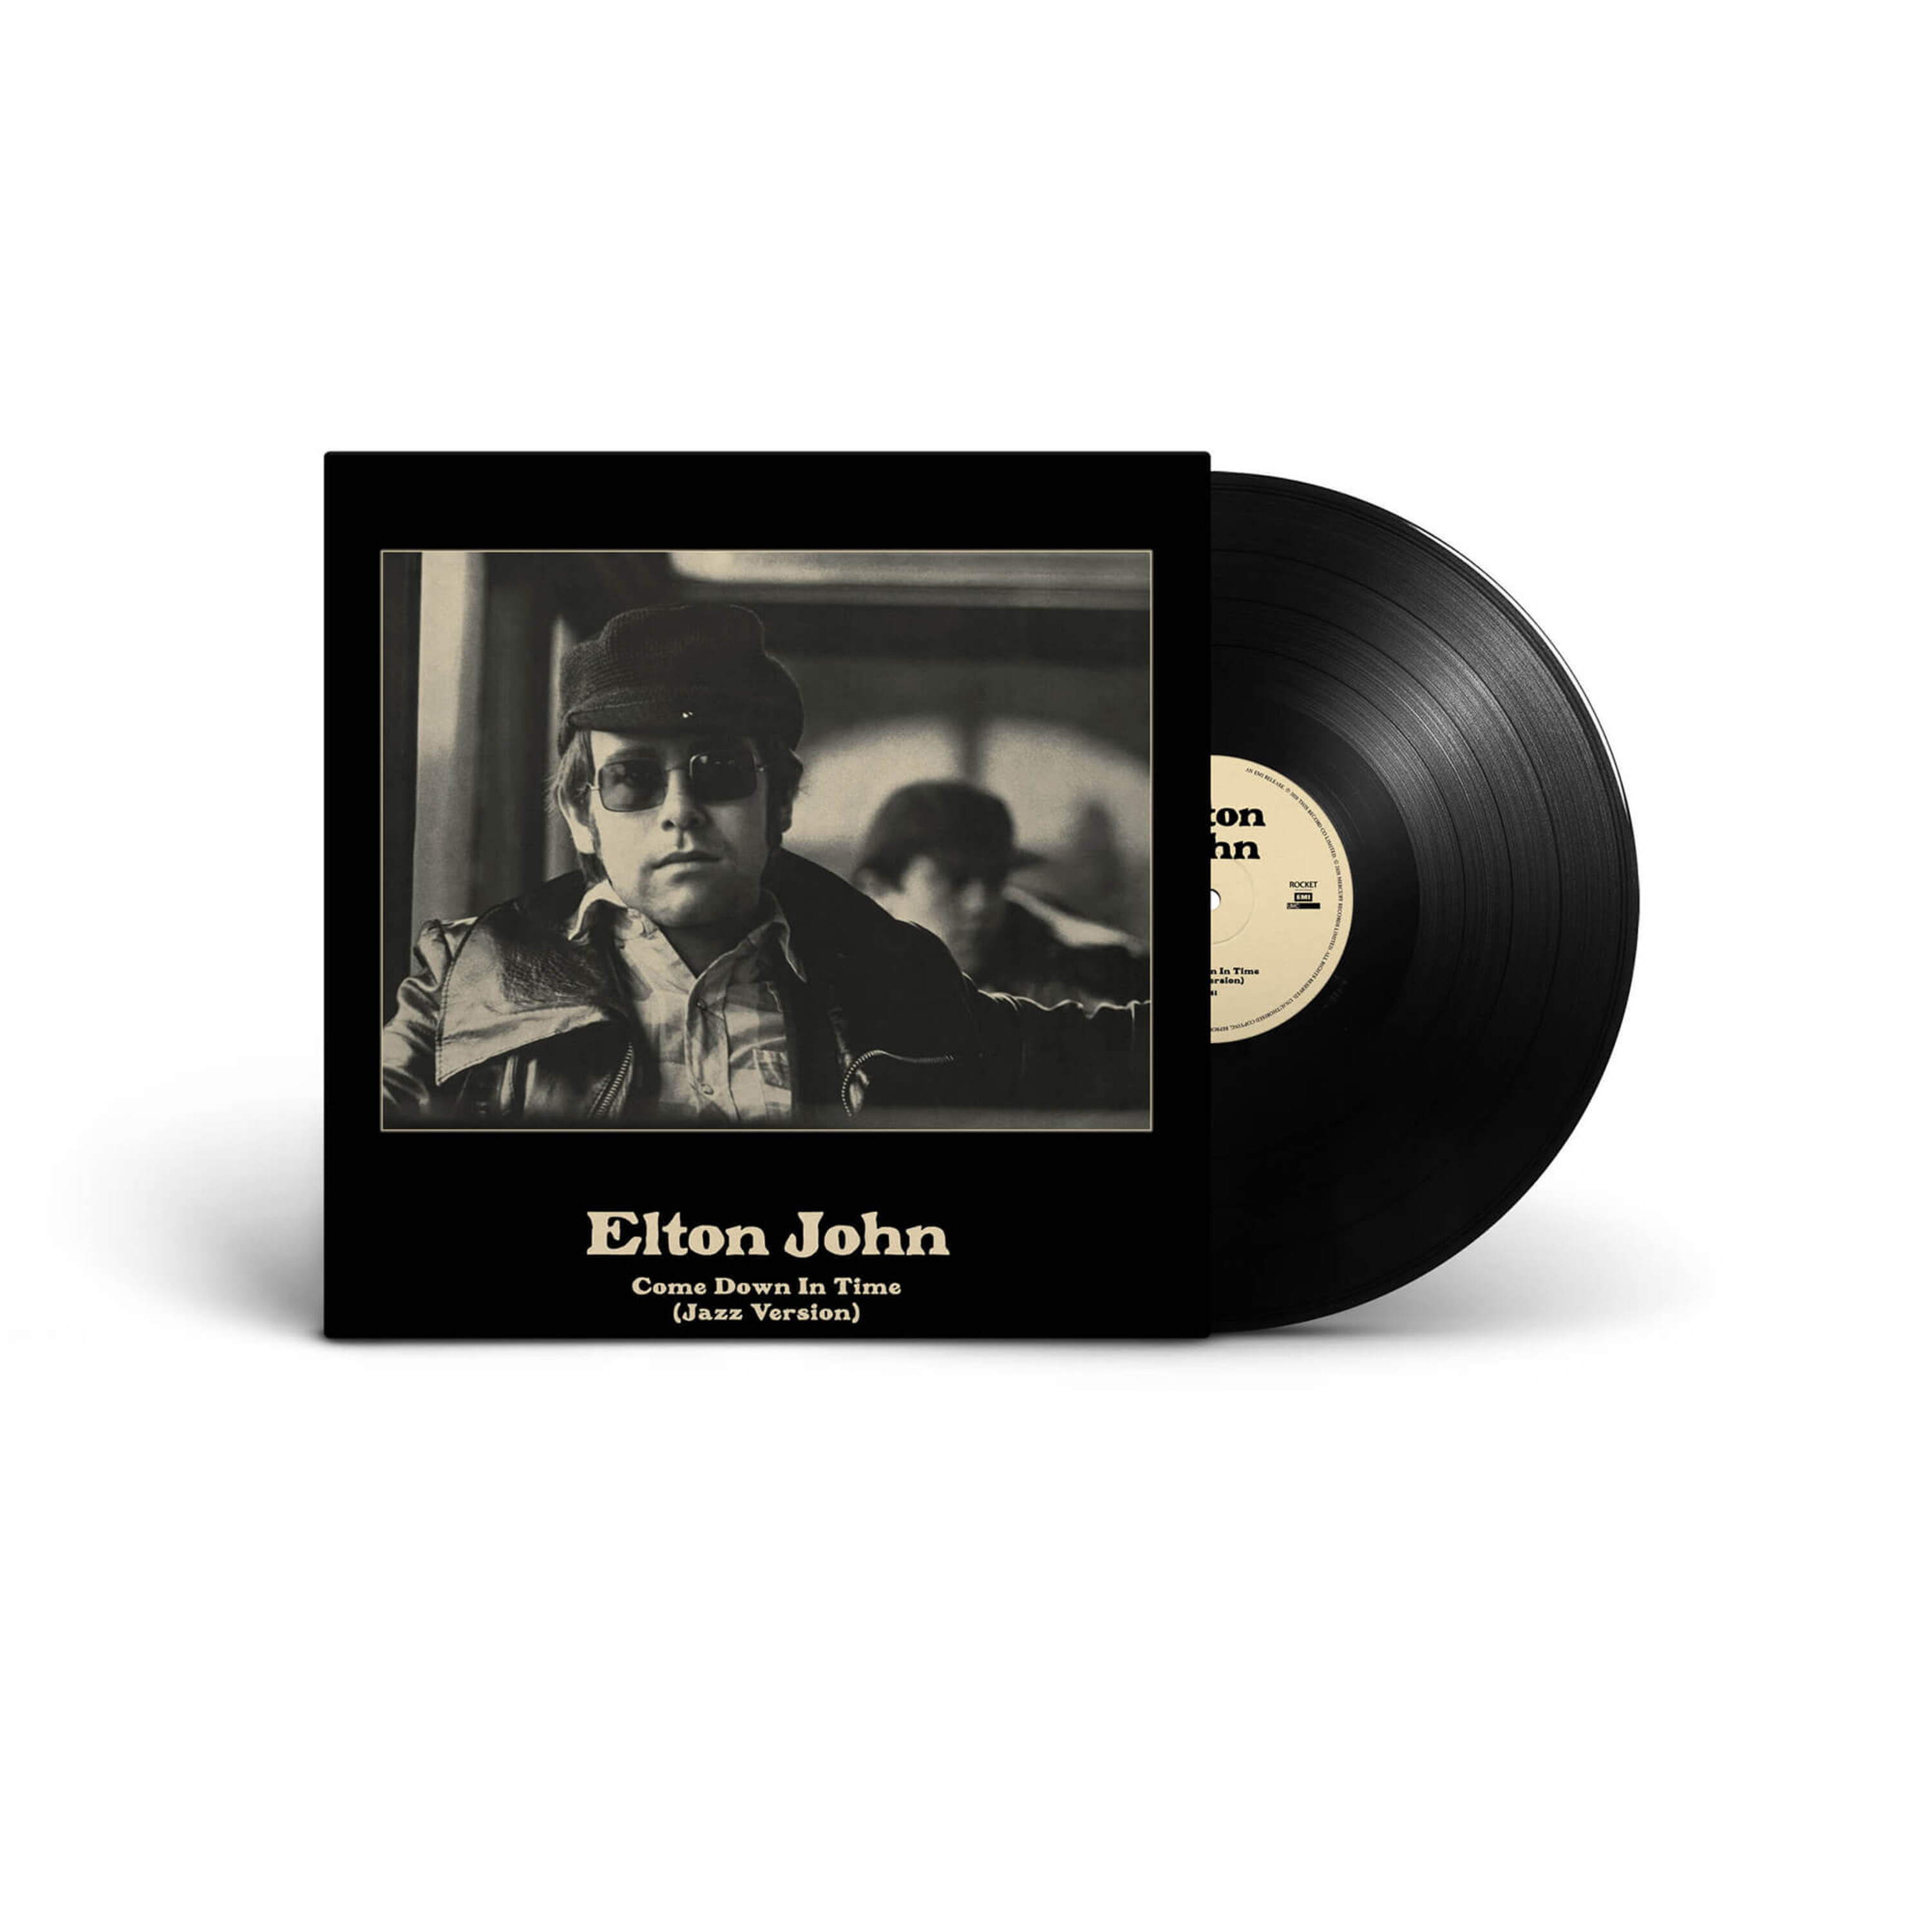 Elton John - Come Down In Time(Jazz Version)